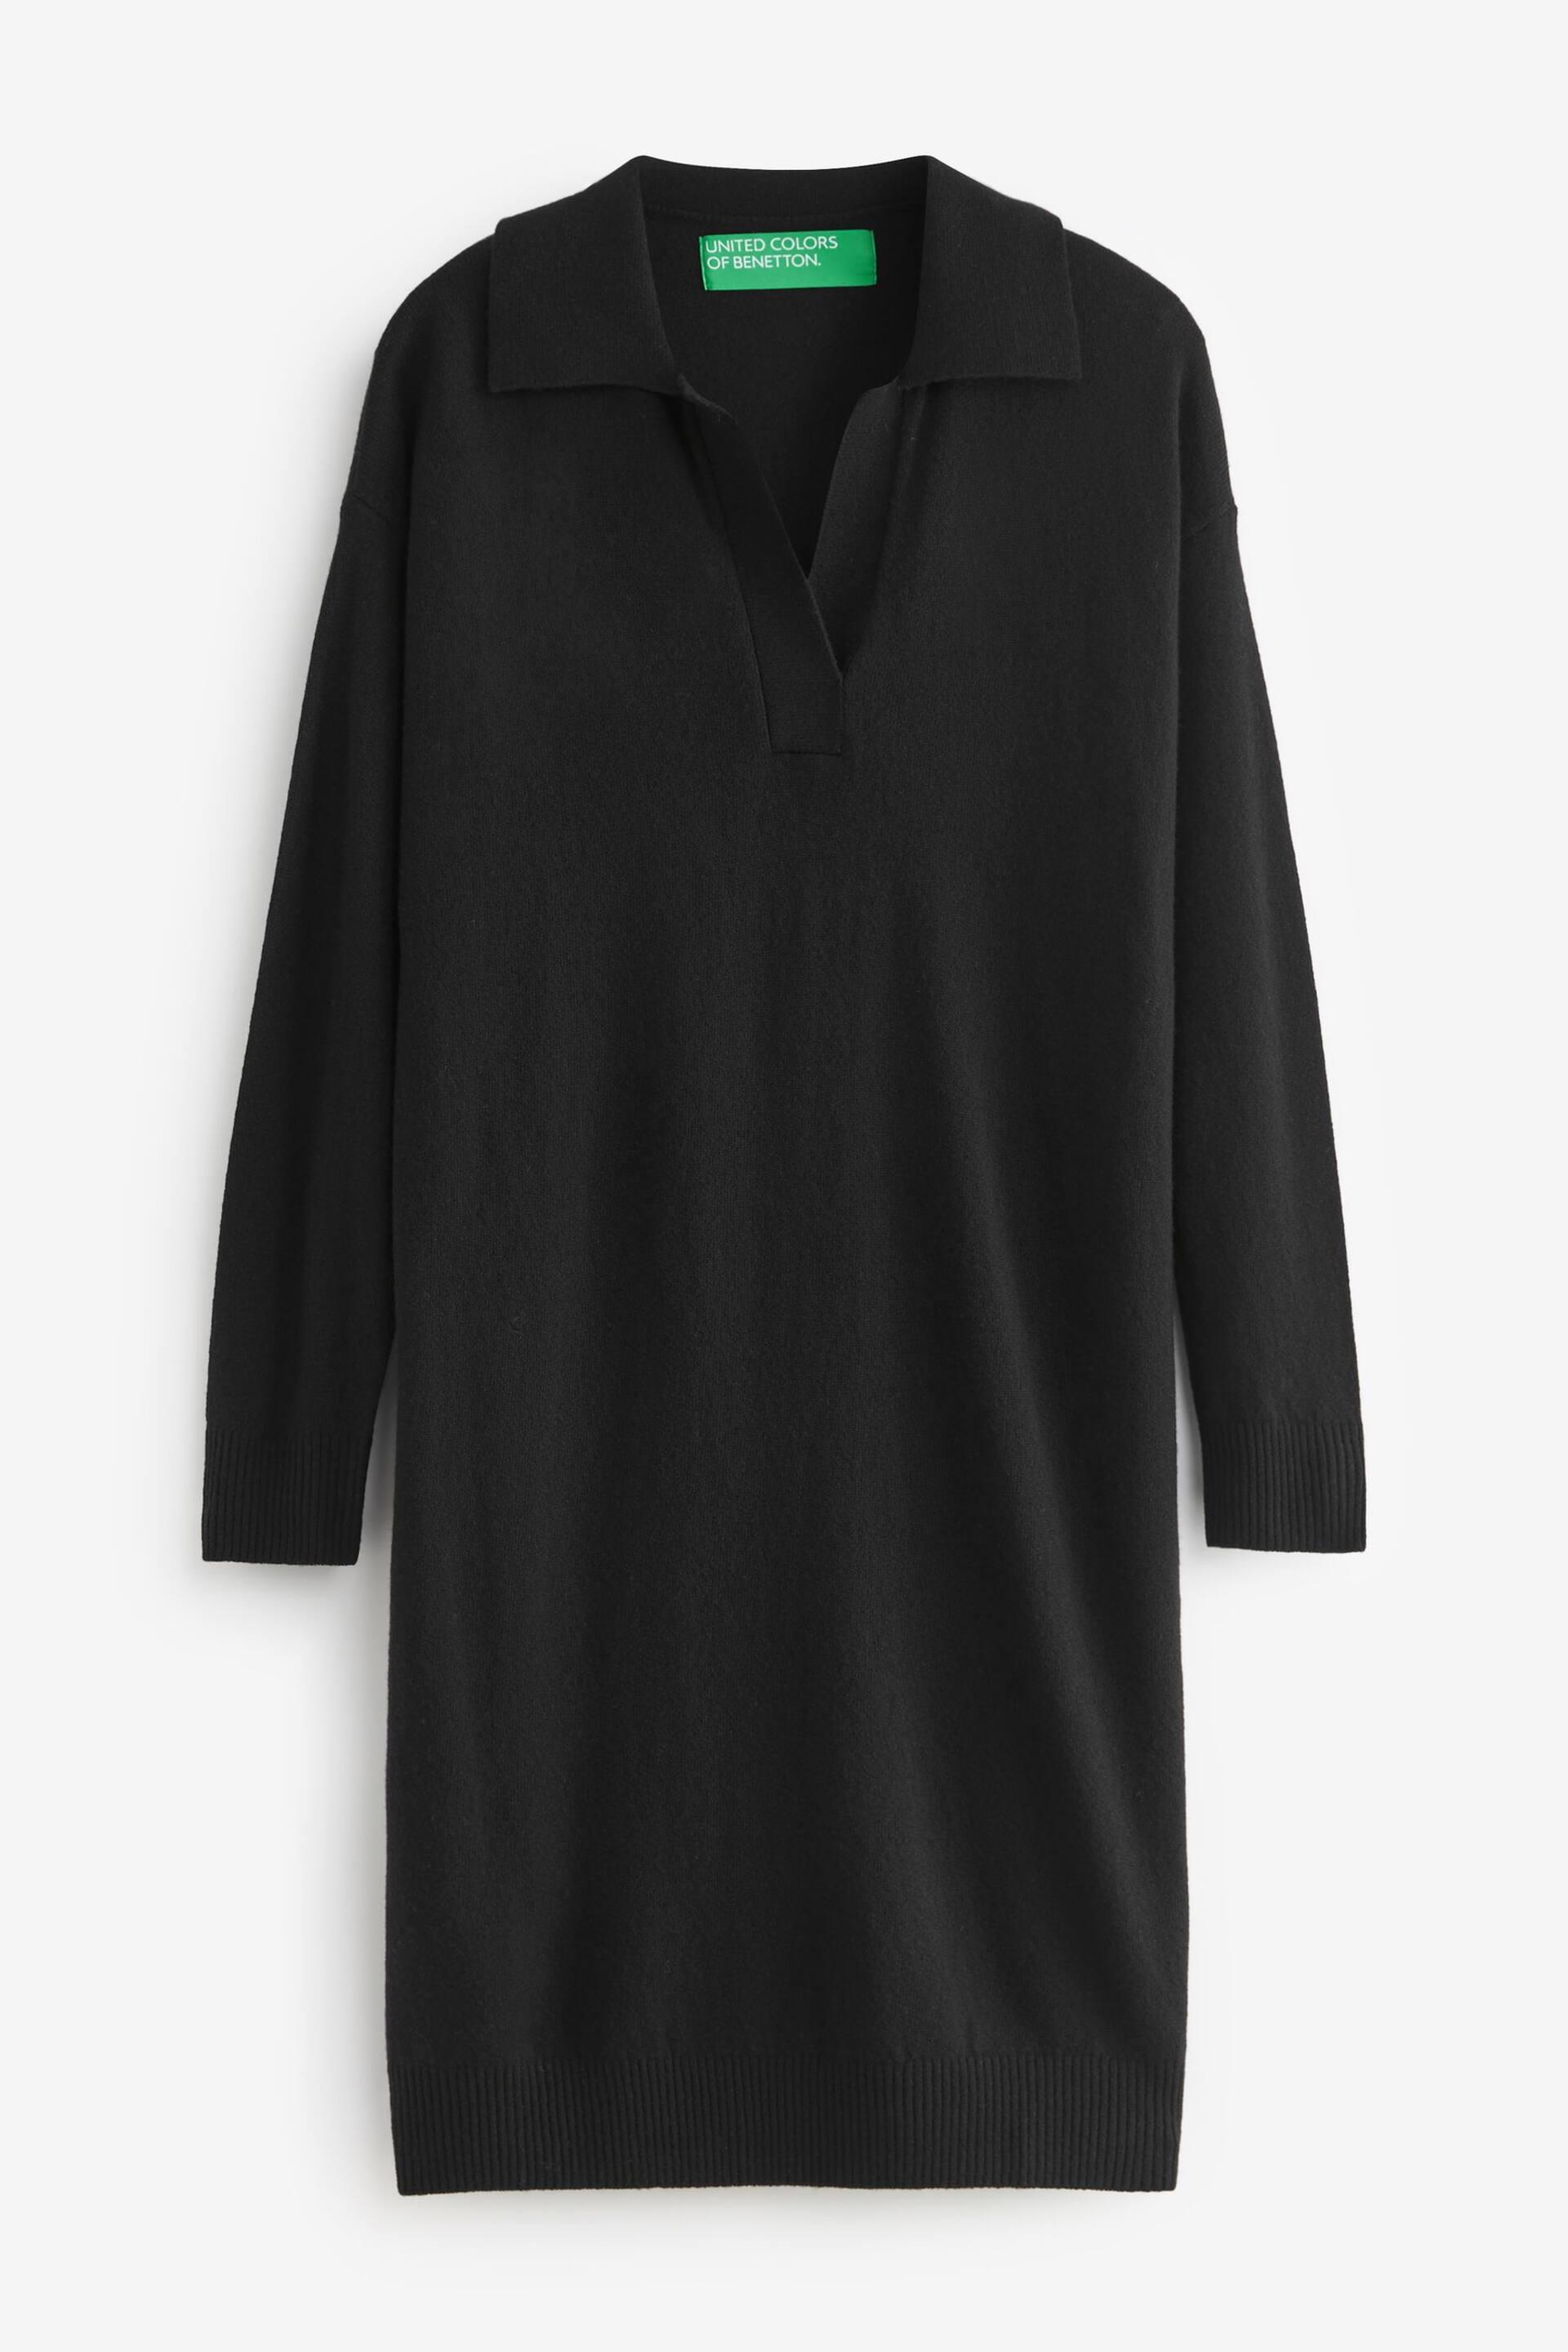 Benetton V-Neck Collared Knit Black Dress - Image 3 of 4